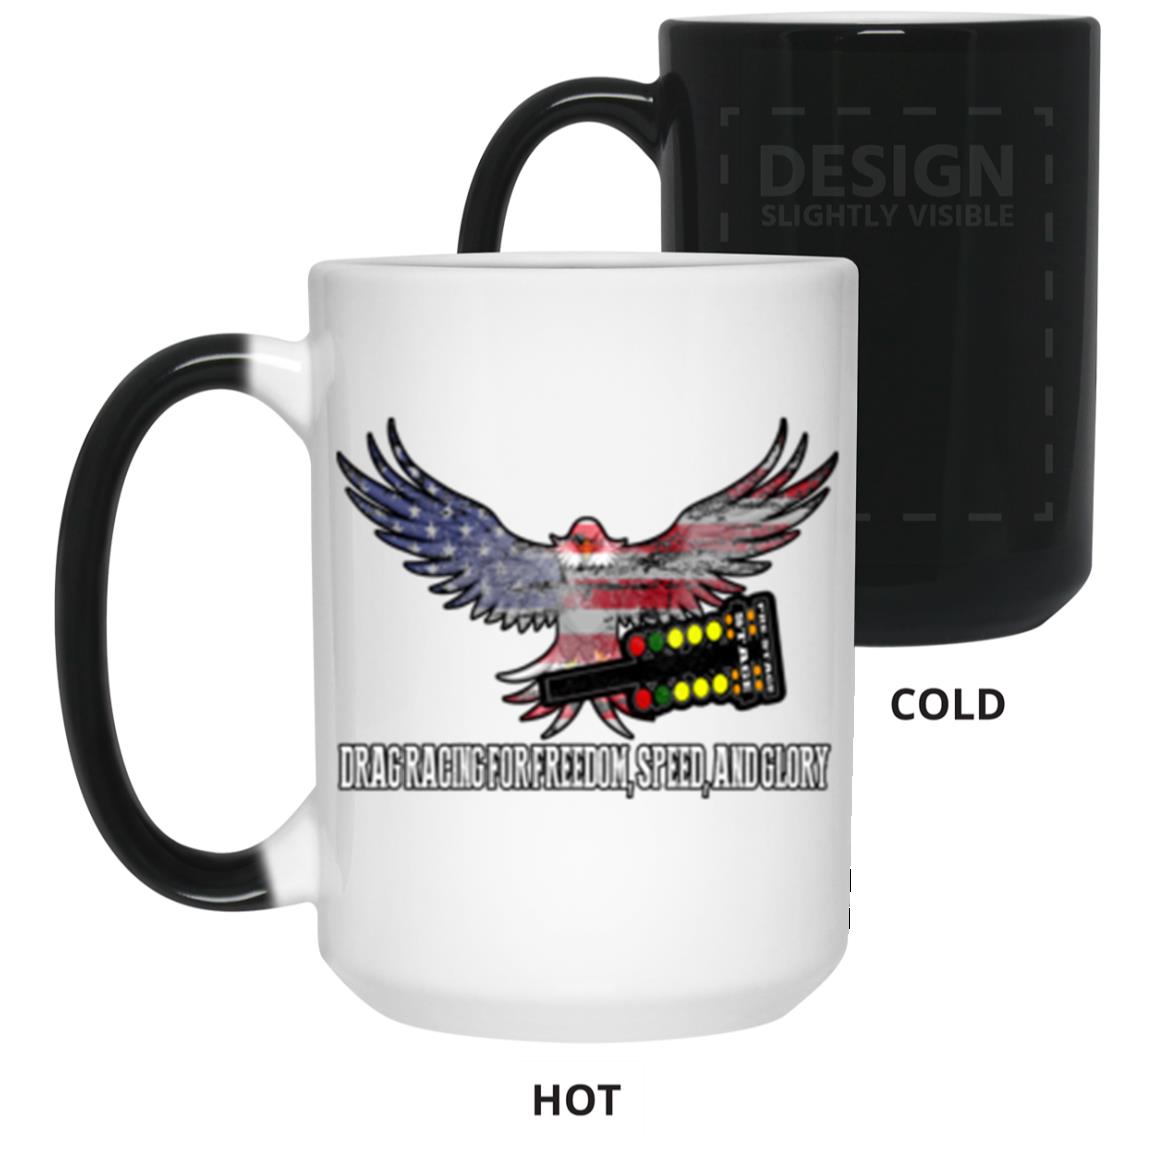 Drag Racing for Freedom, Speed, and Glory 15 oz. Color Changing Mug